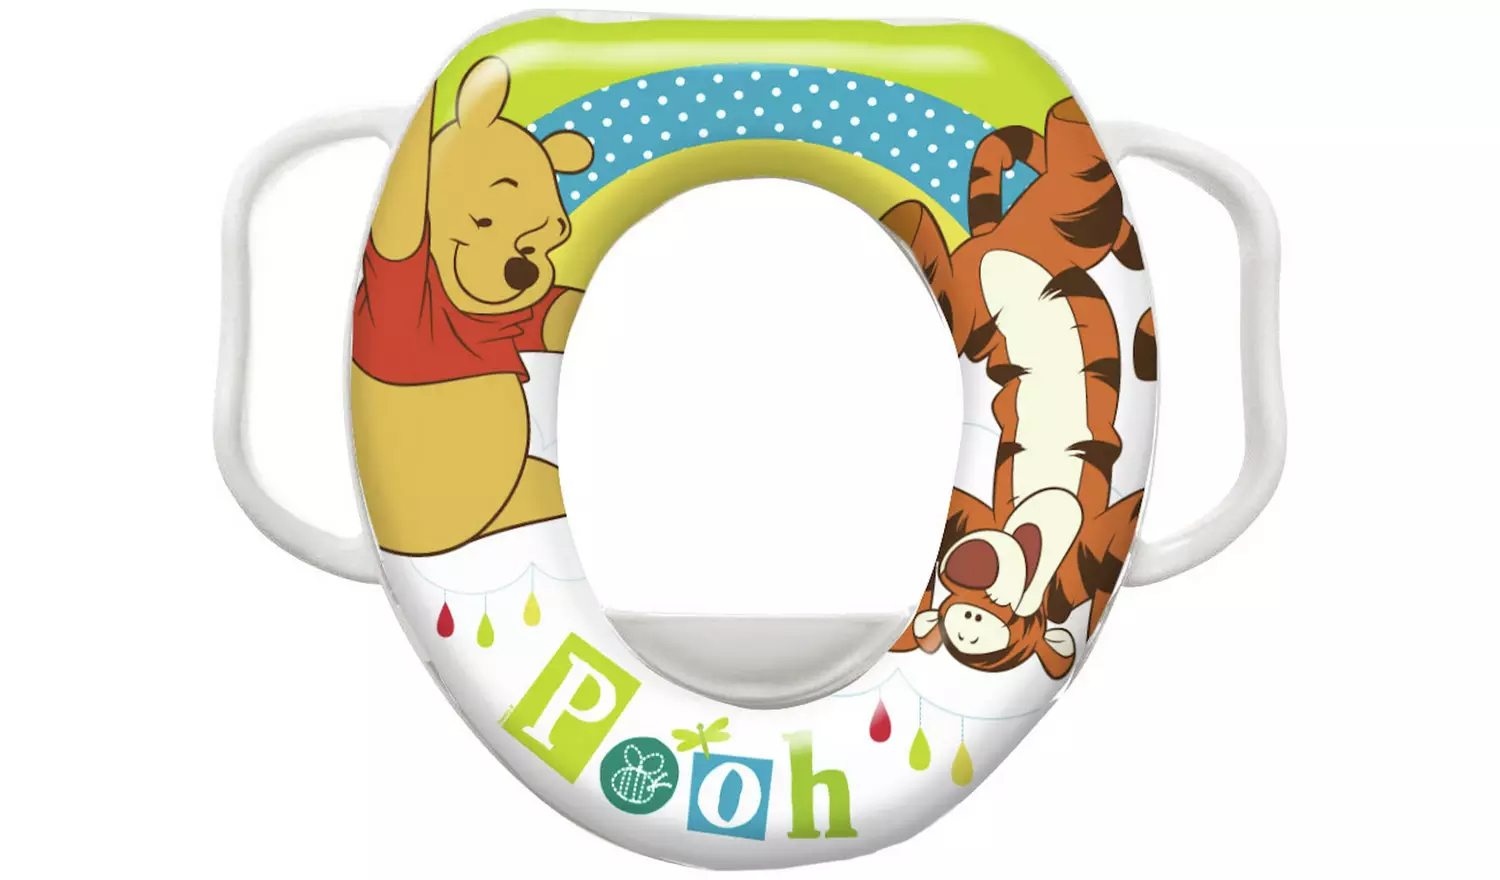 Disney Winnie the Pooh Soft Padded Toilet Seat